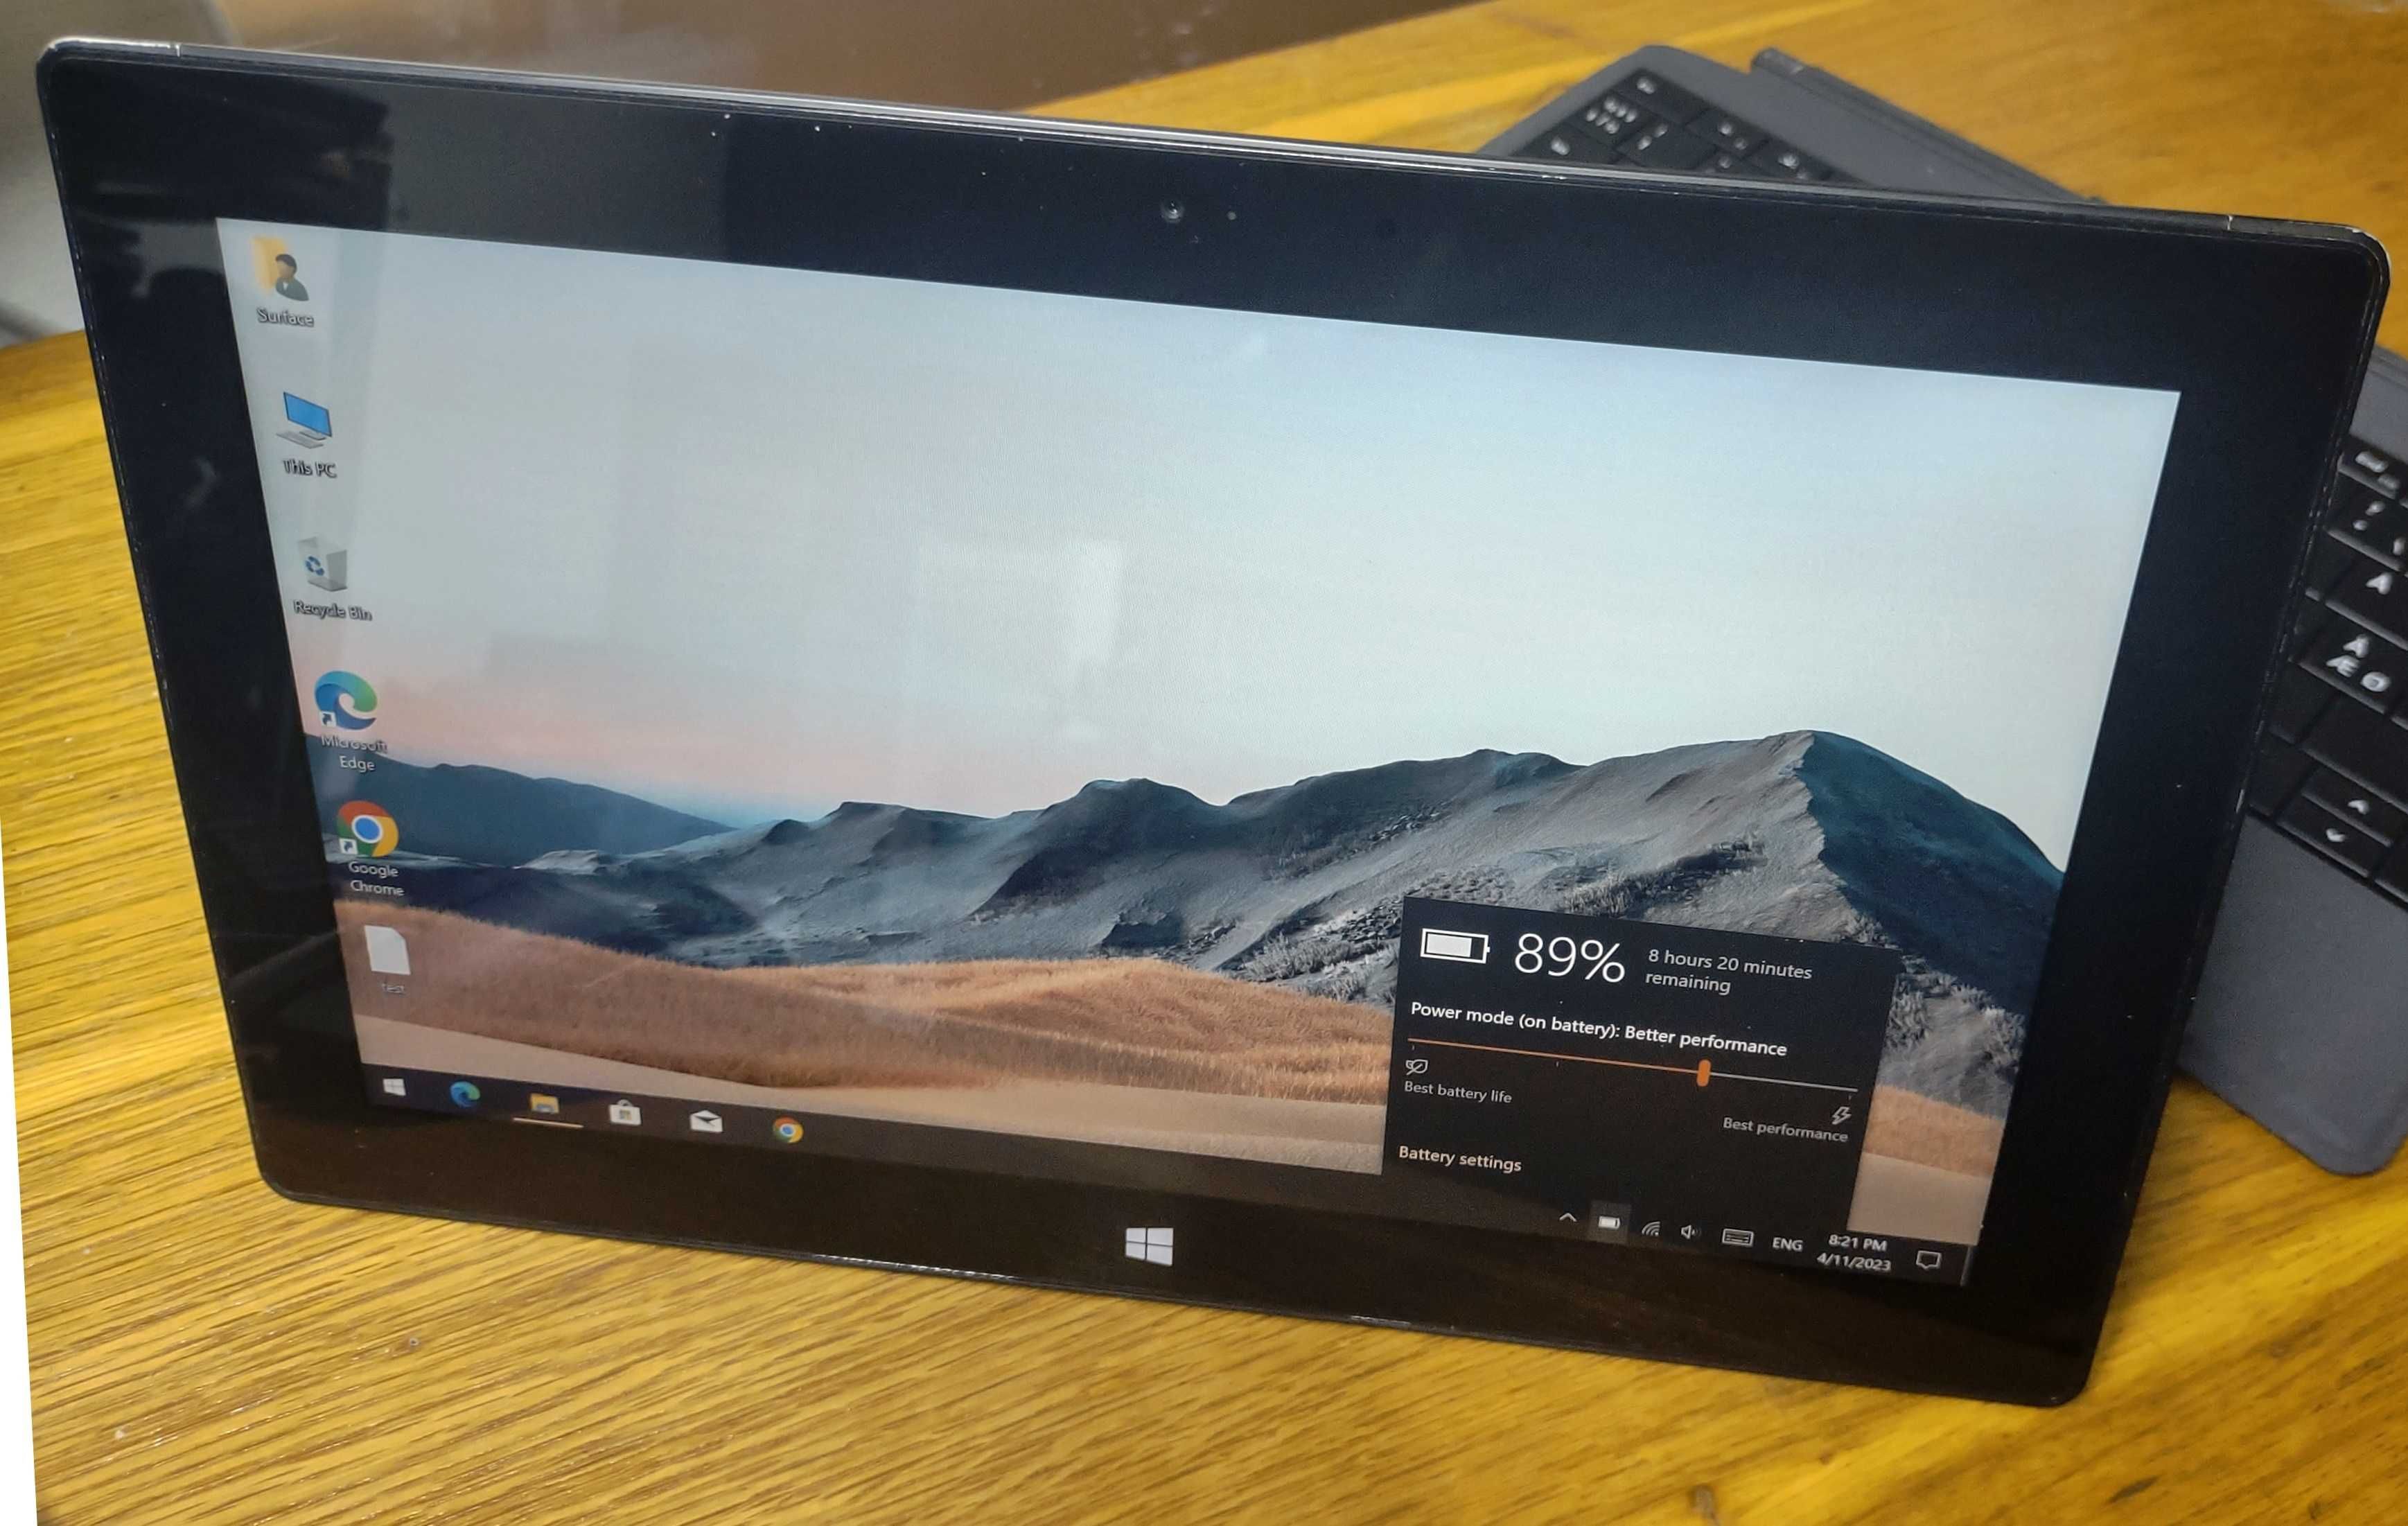 Tableta Win 10 Microsoft Surface Pro intel i5 3317U 2.6GHz| 128GB| 4GB